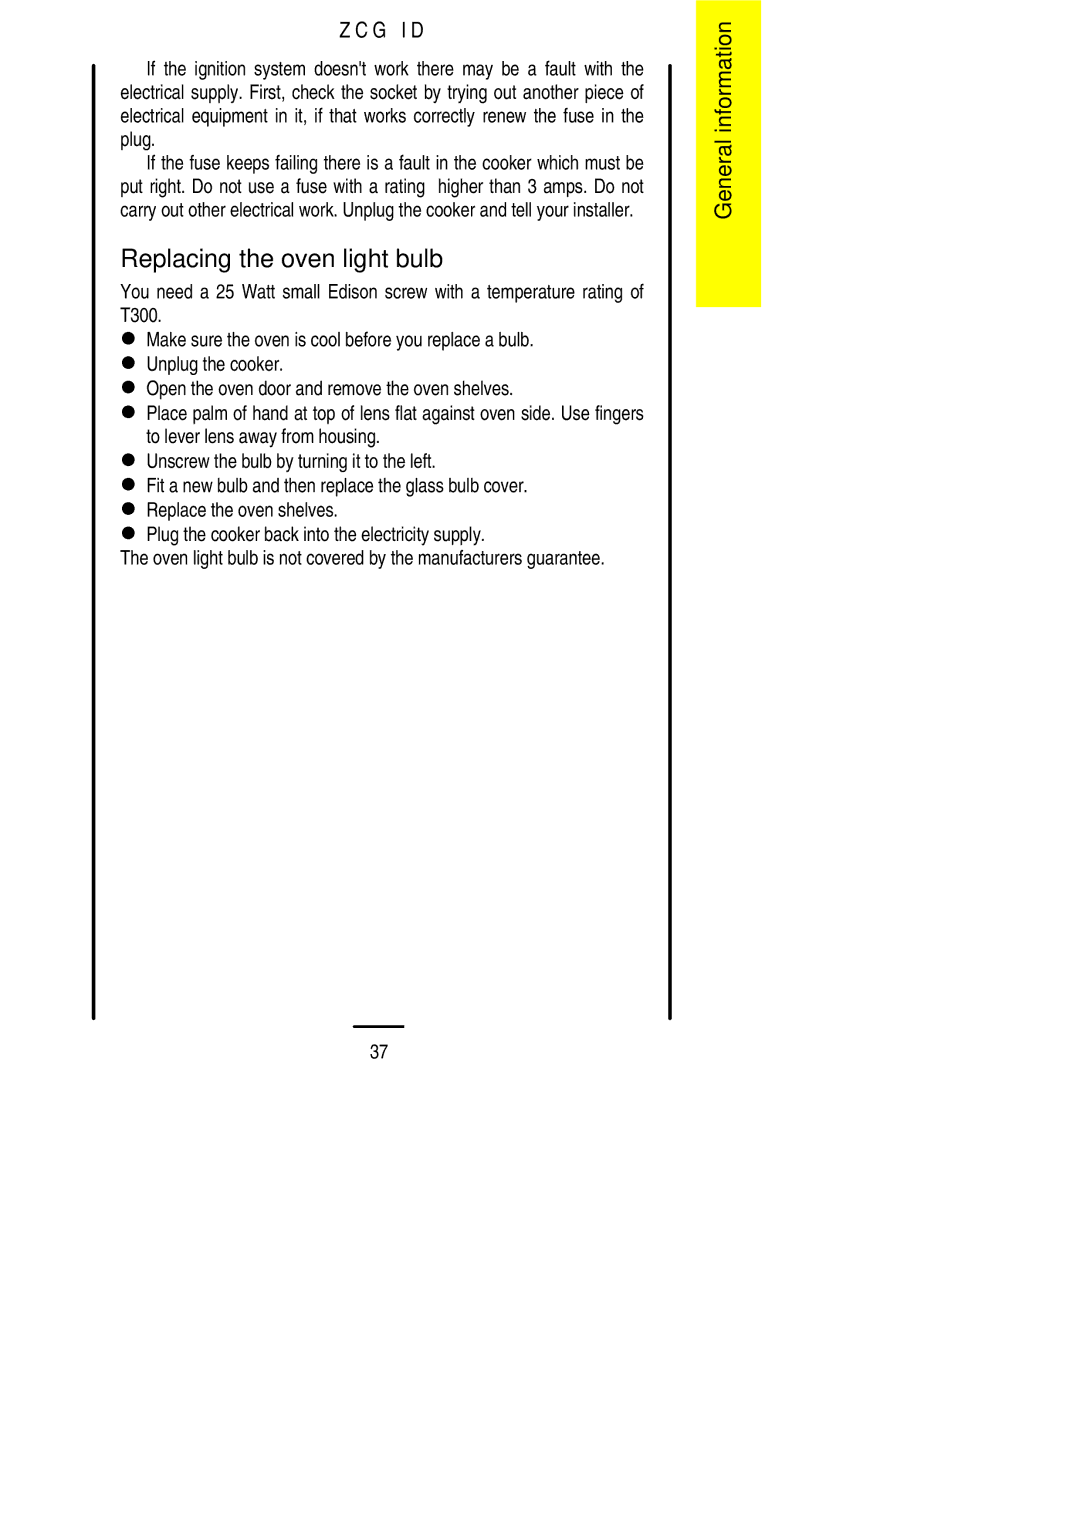 Zanussi ZCG ID manual Replacing the oven light bulb 